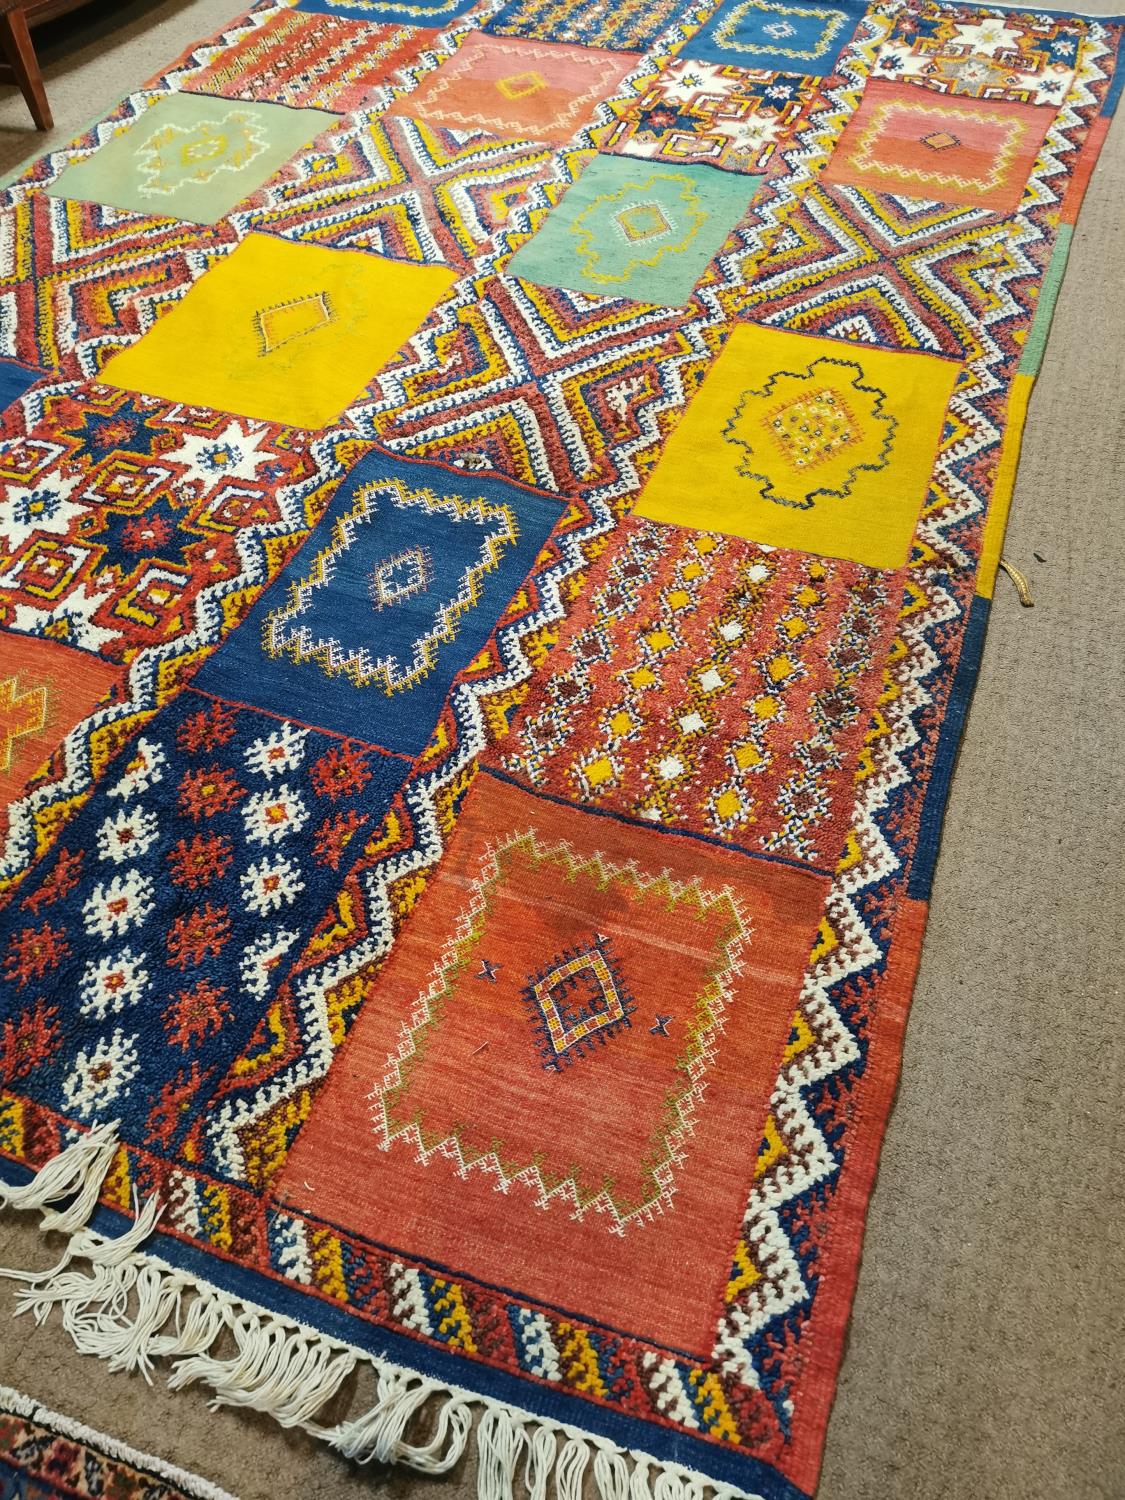 Decorative Persian carpet square. - Image 2 of 4